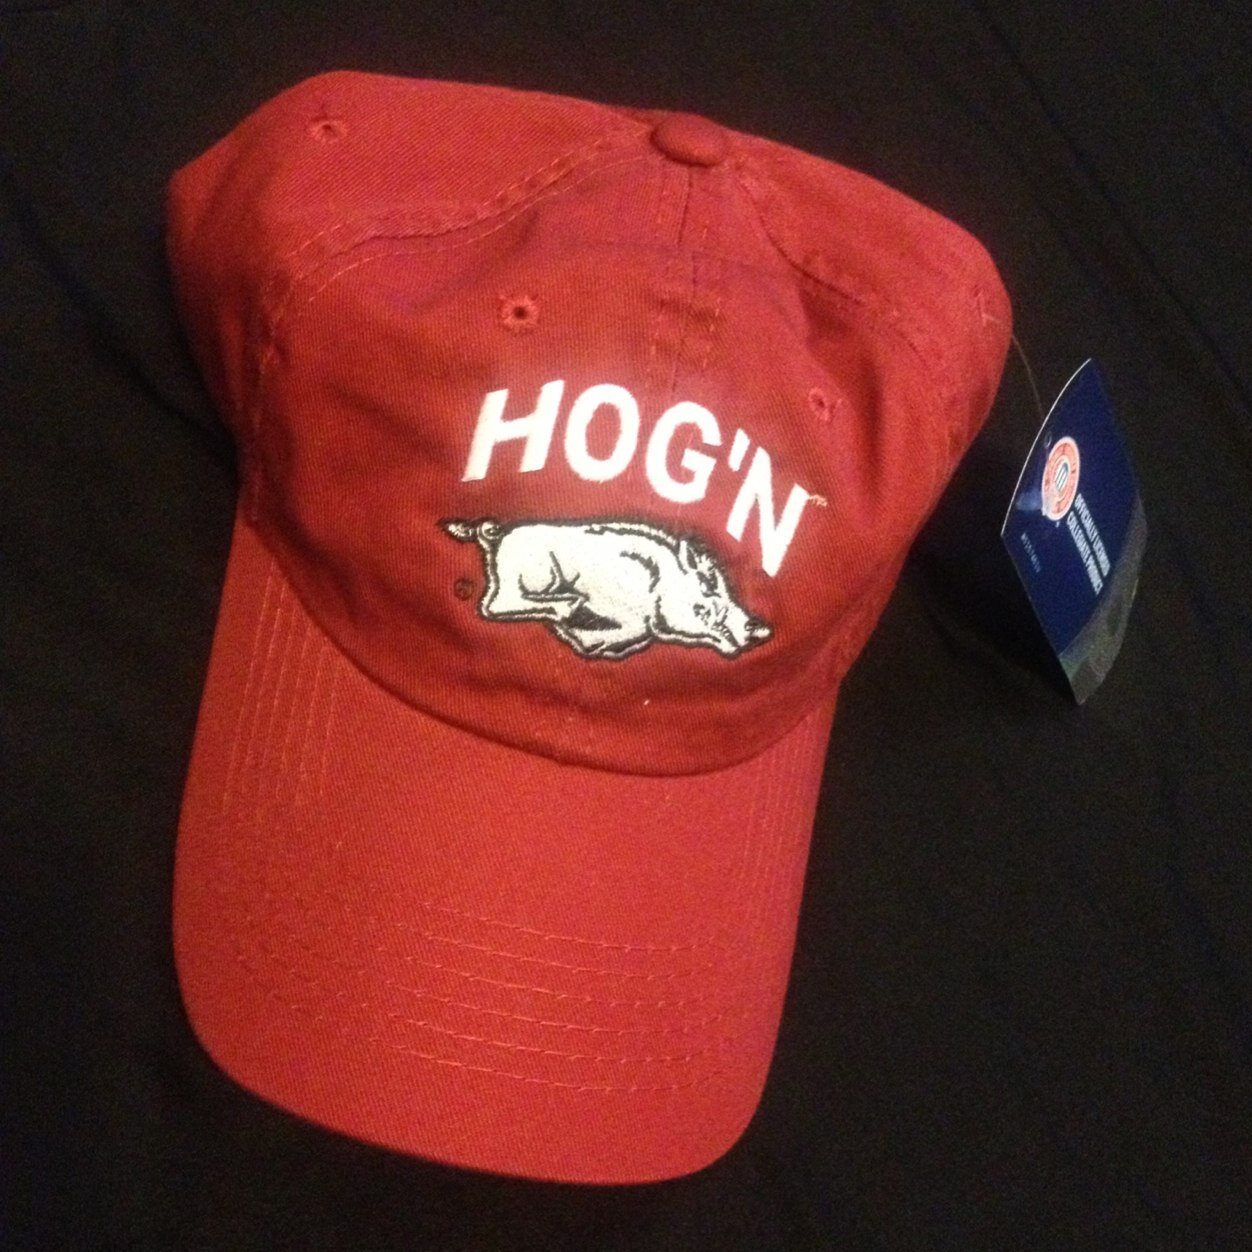 When delivered my room was facing War Memorial Stadium.1st words:Woo Pig! Founder of  HOG'N clothing line. I follow HOG fans like me!